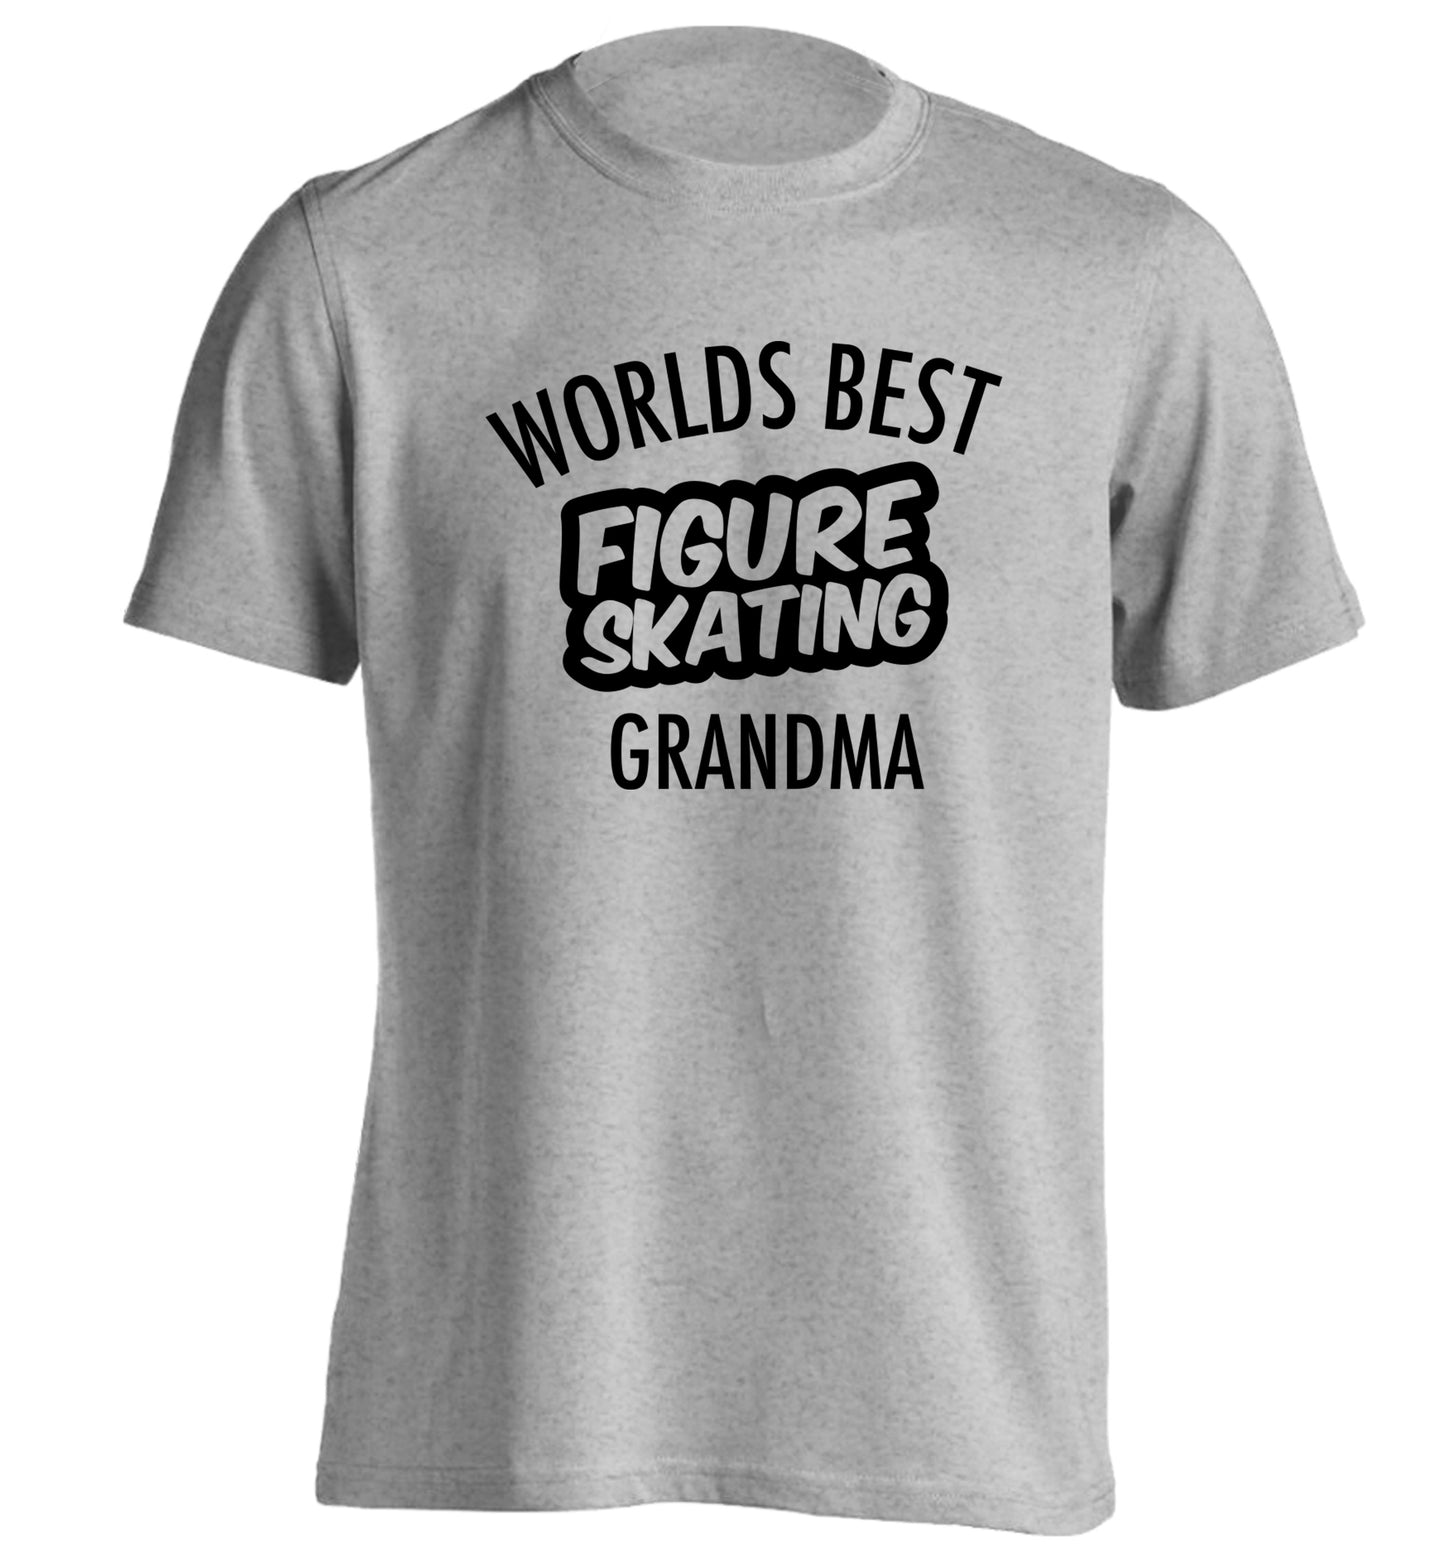 Worlds best figure skating grandma adults unisexgrey Tshirt 2XL